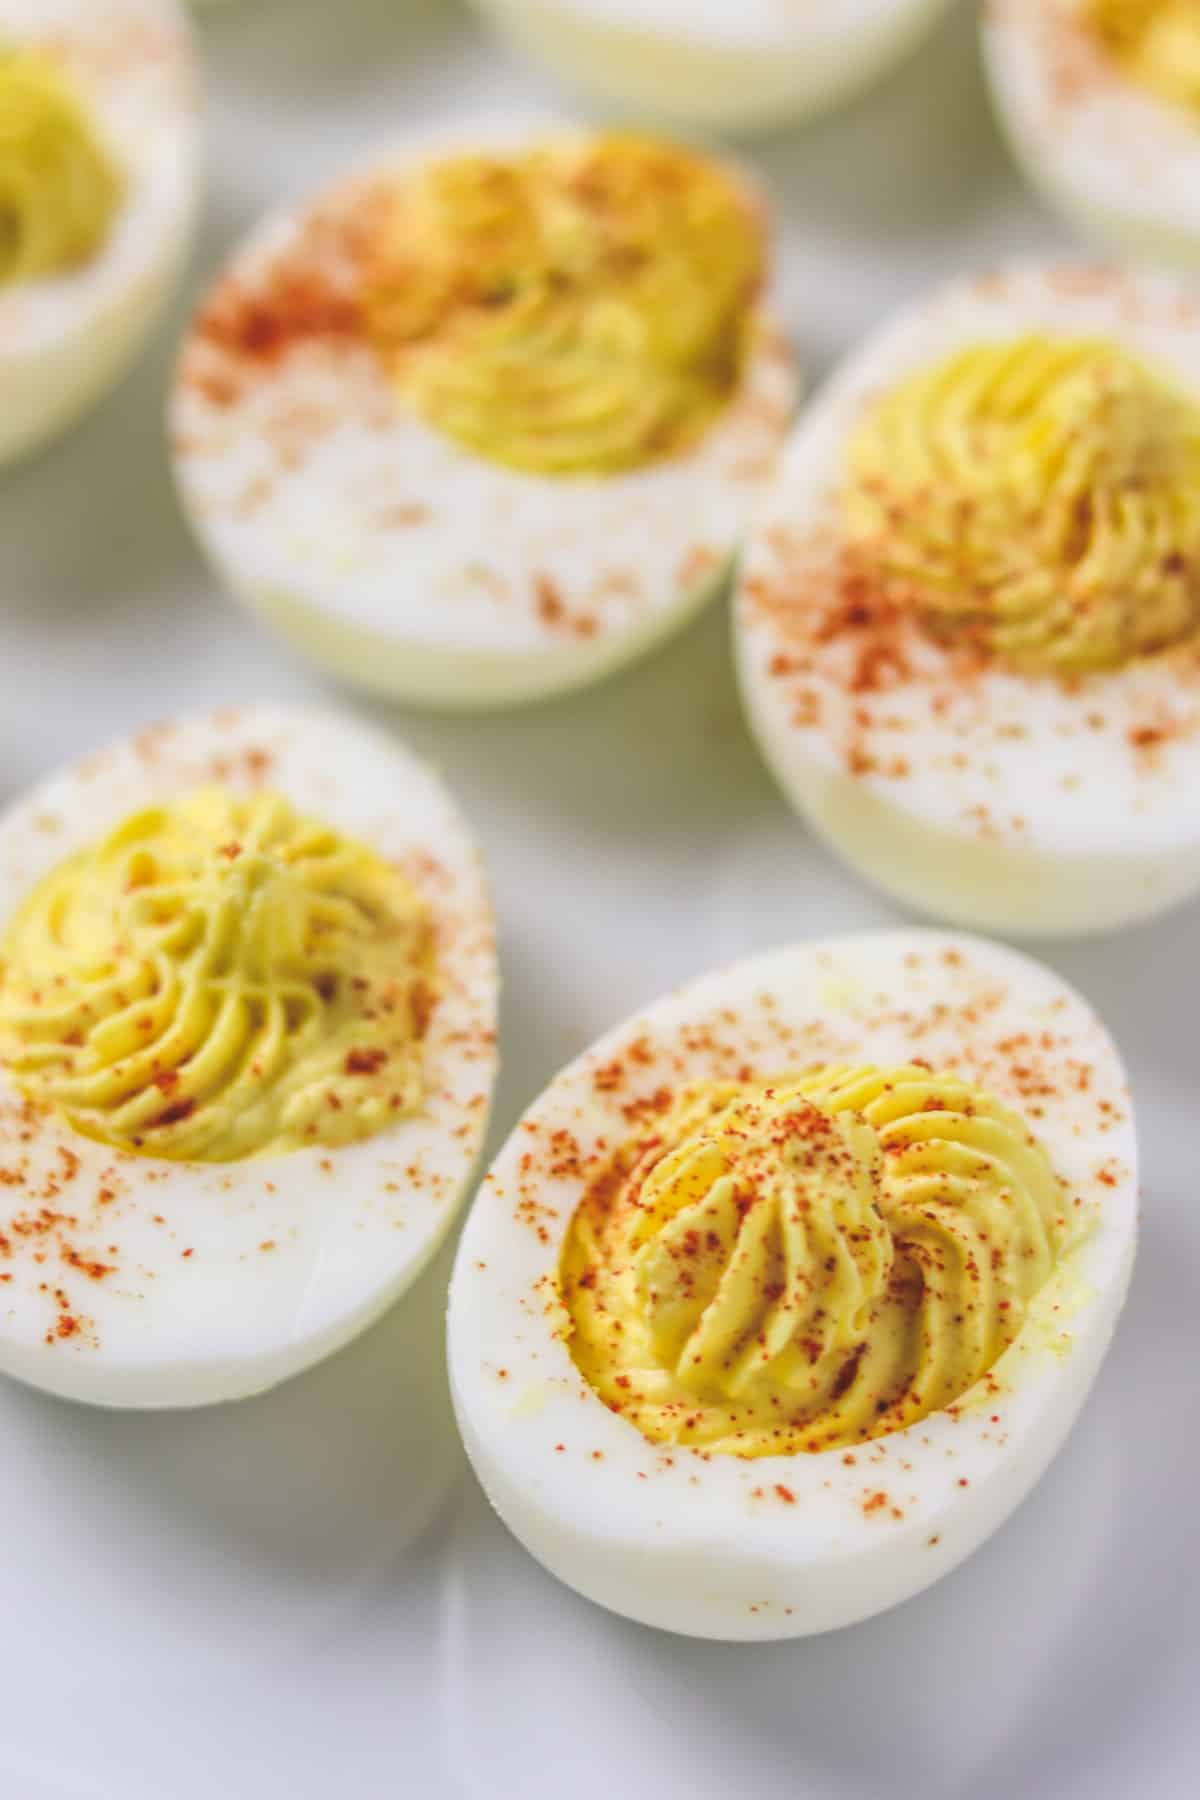 zoom in on deviled eggs on platter